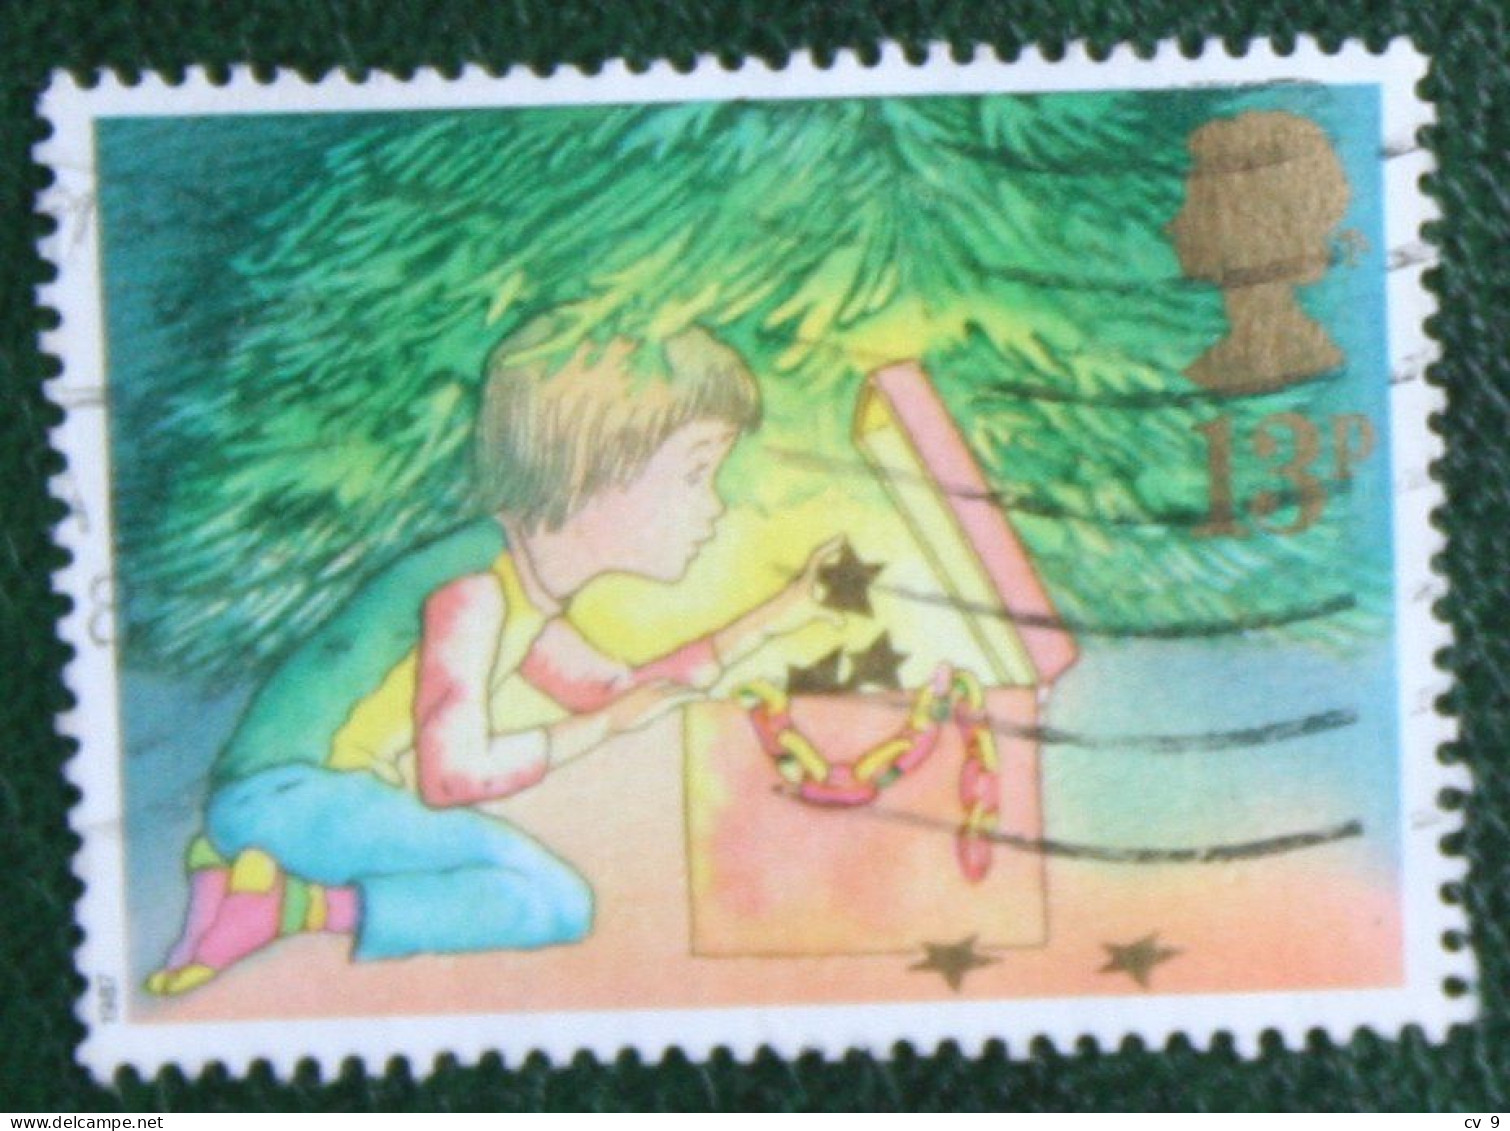 13 P Natale Weihnachten Xmas Noel (Mi 1126) 1987 Used Gebruikt Oblitere ENGLAND GRANDE-BRETAGNE GB GREAT BRITAIN - Used Stamps